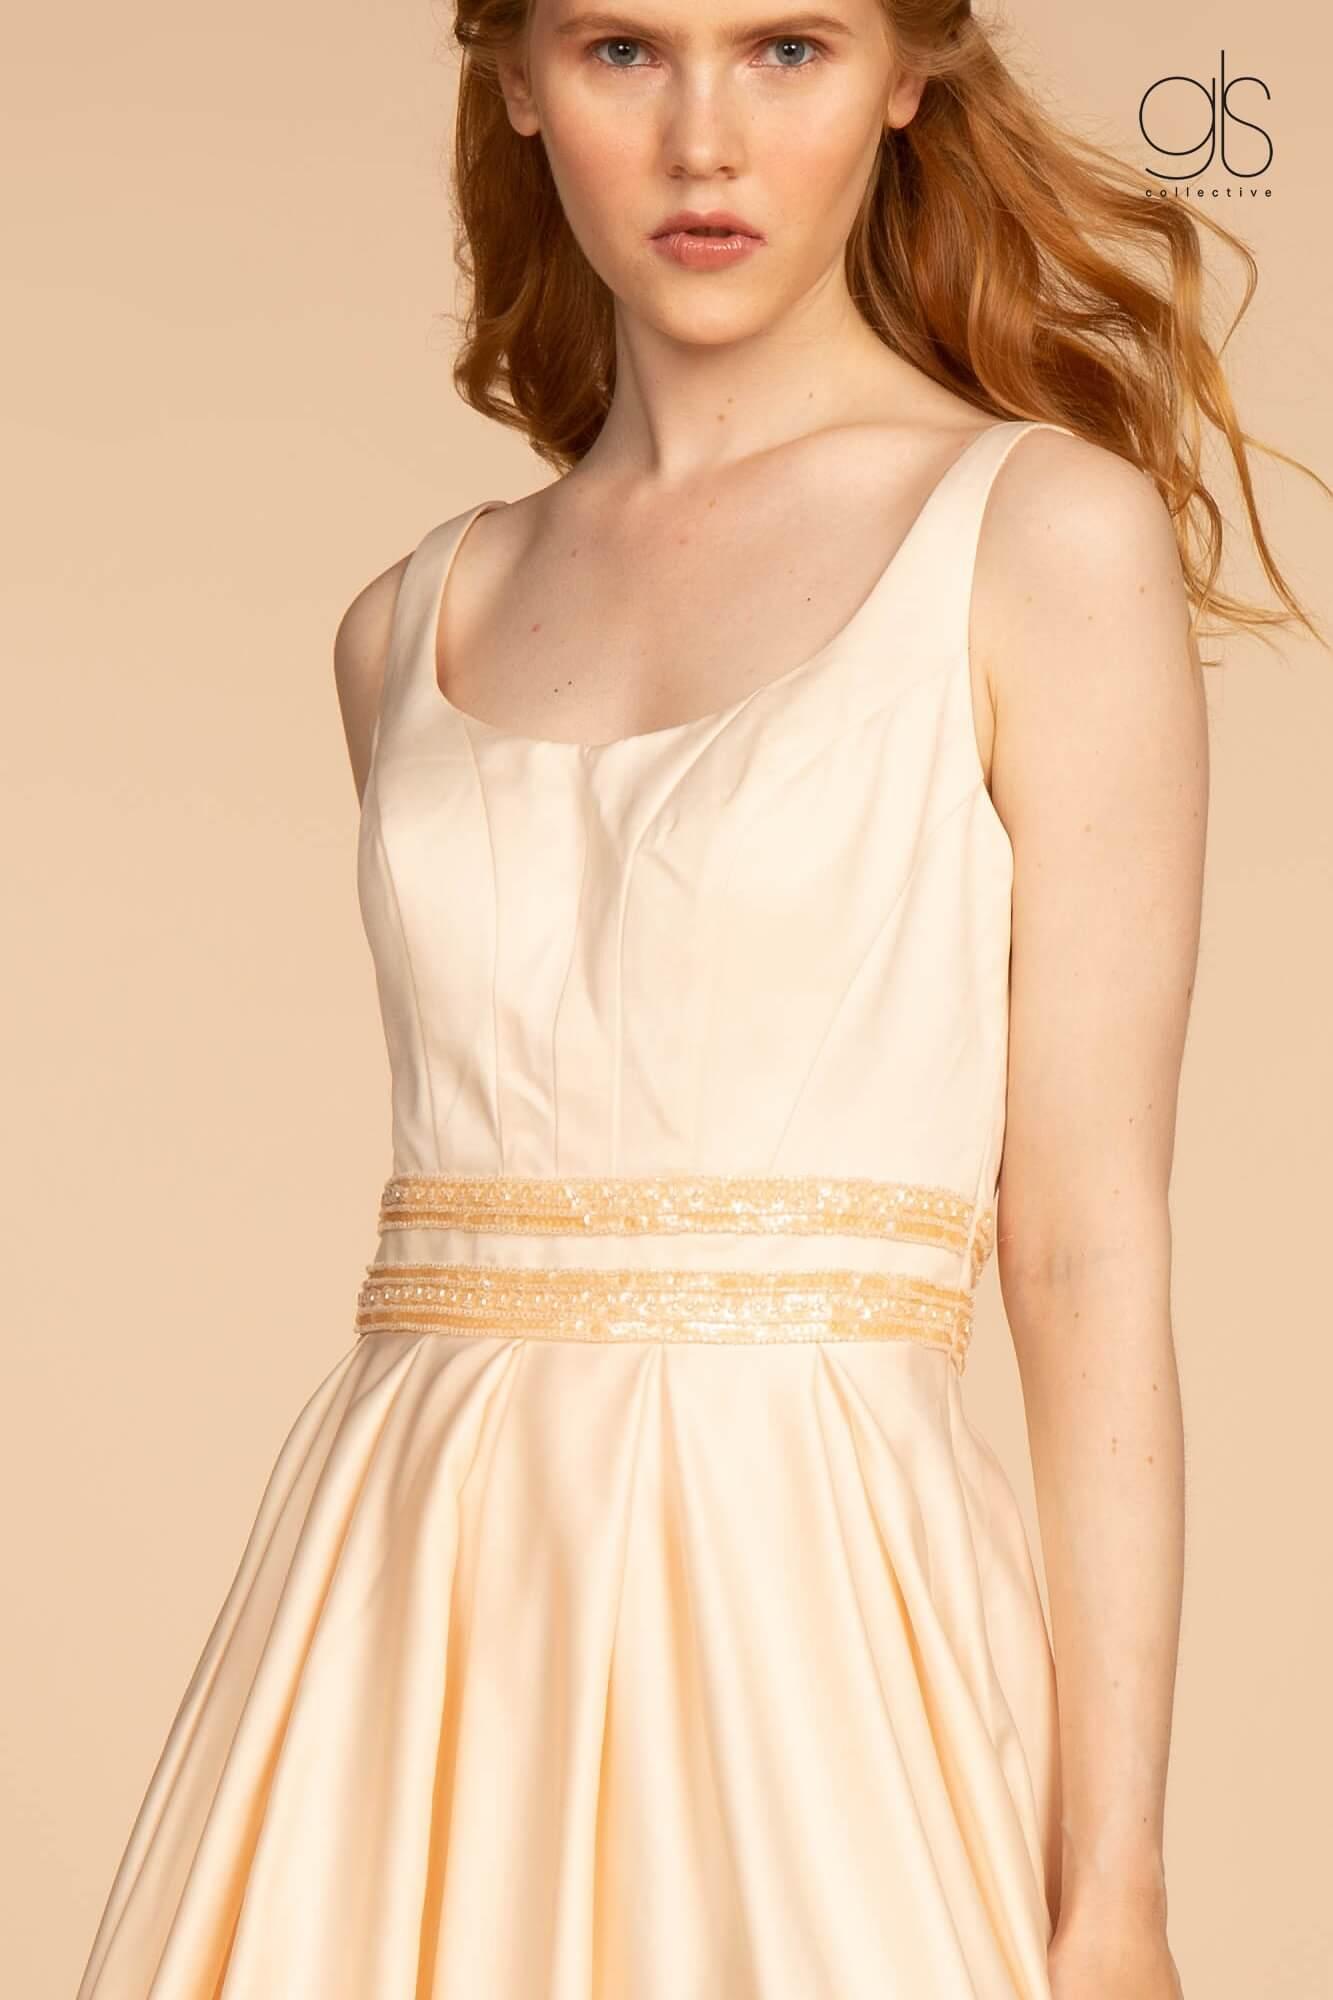 Prom Long Sleeveless Formal Evening Dress - The Dress Outlet Elizabeth K